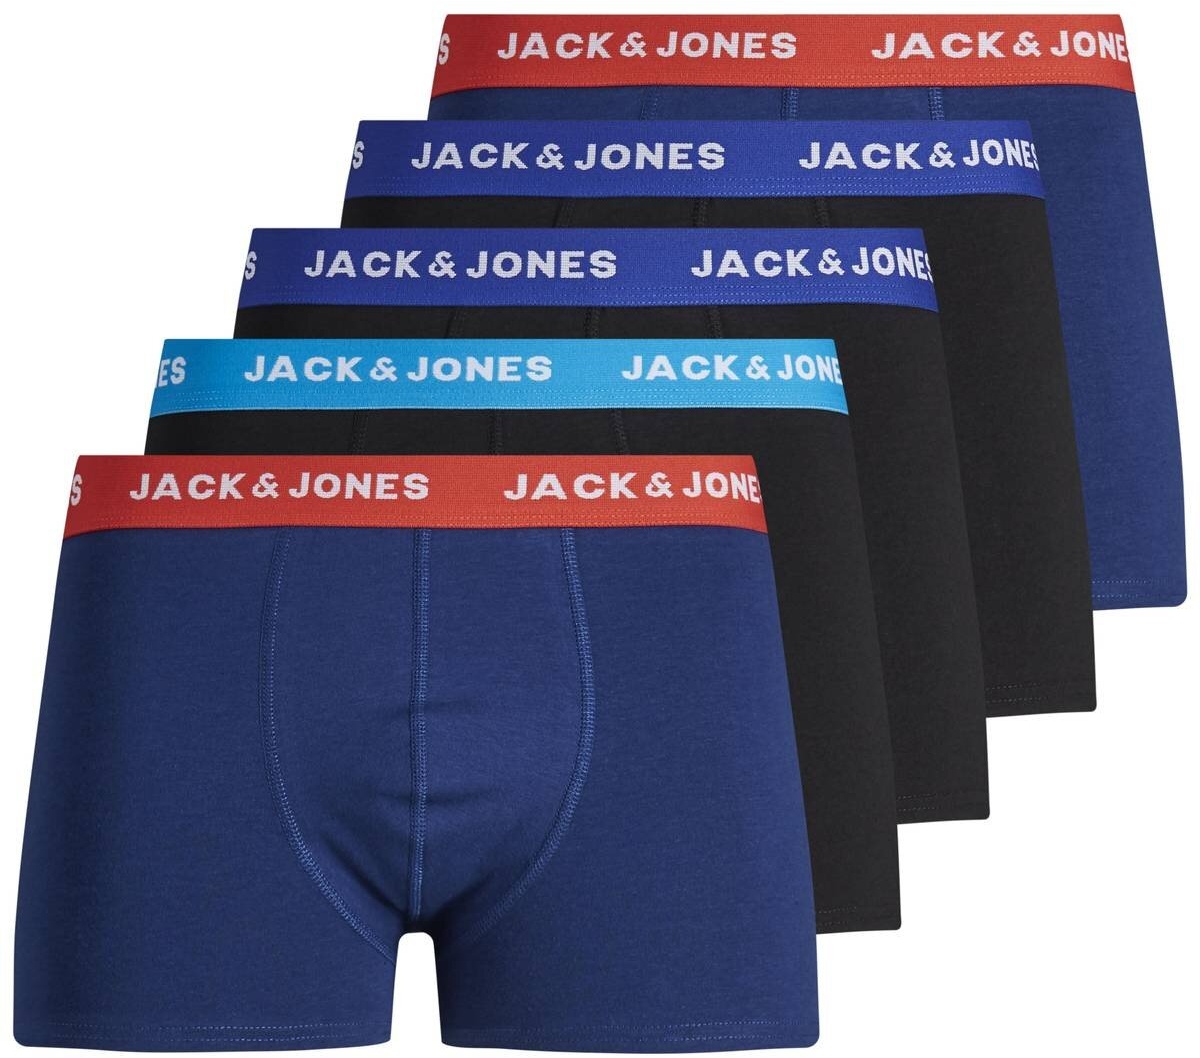 JACK&JONES Herren Boxer Shorts, 5er Pack - JACLEE TRUNKS, Baumwoll-Stretch Schwarz/Blau M